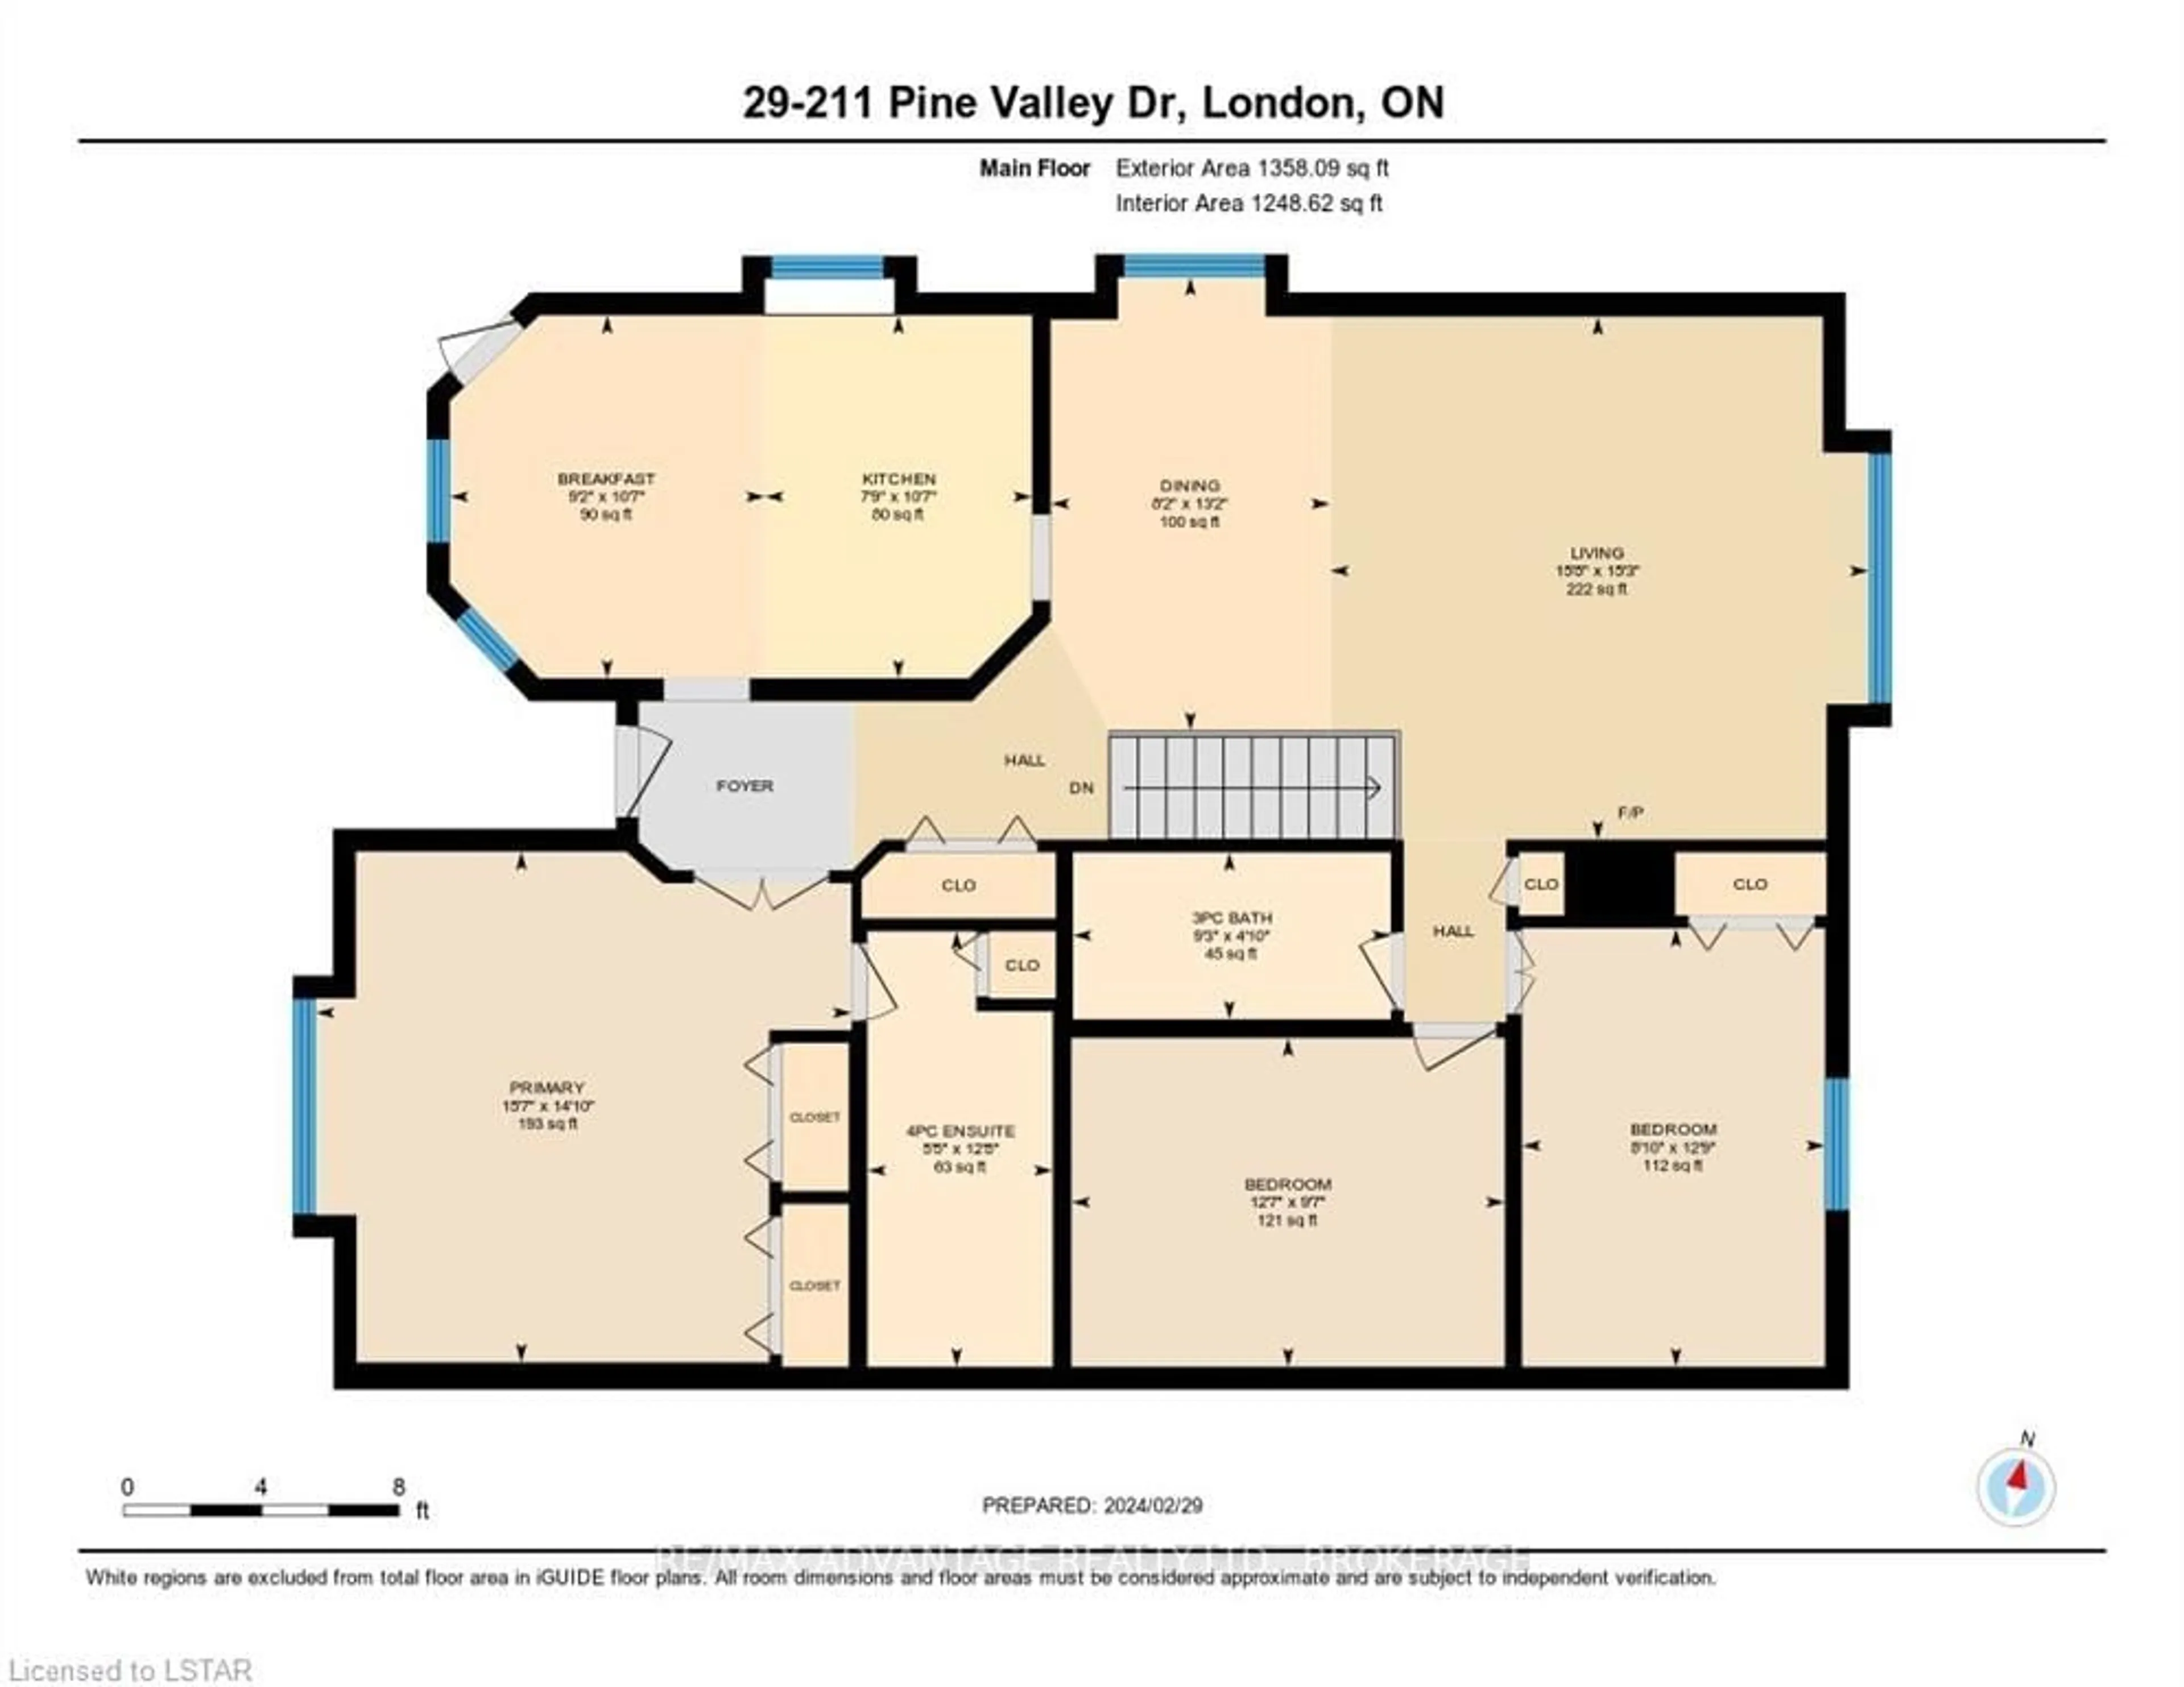 Floor plan for 211 Pine Valley Dr #29, London Ontario N6J 4W5